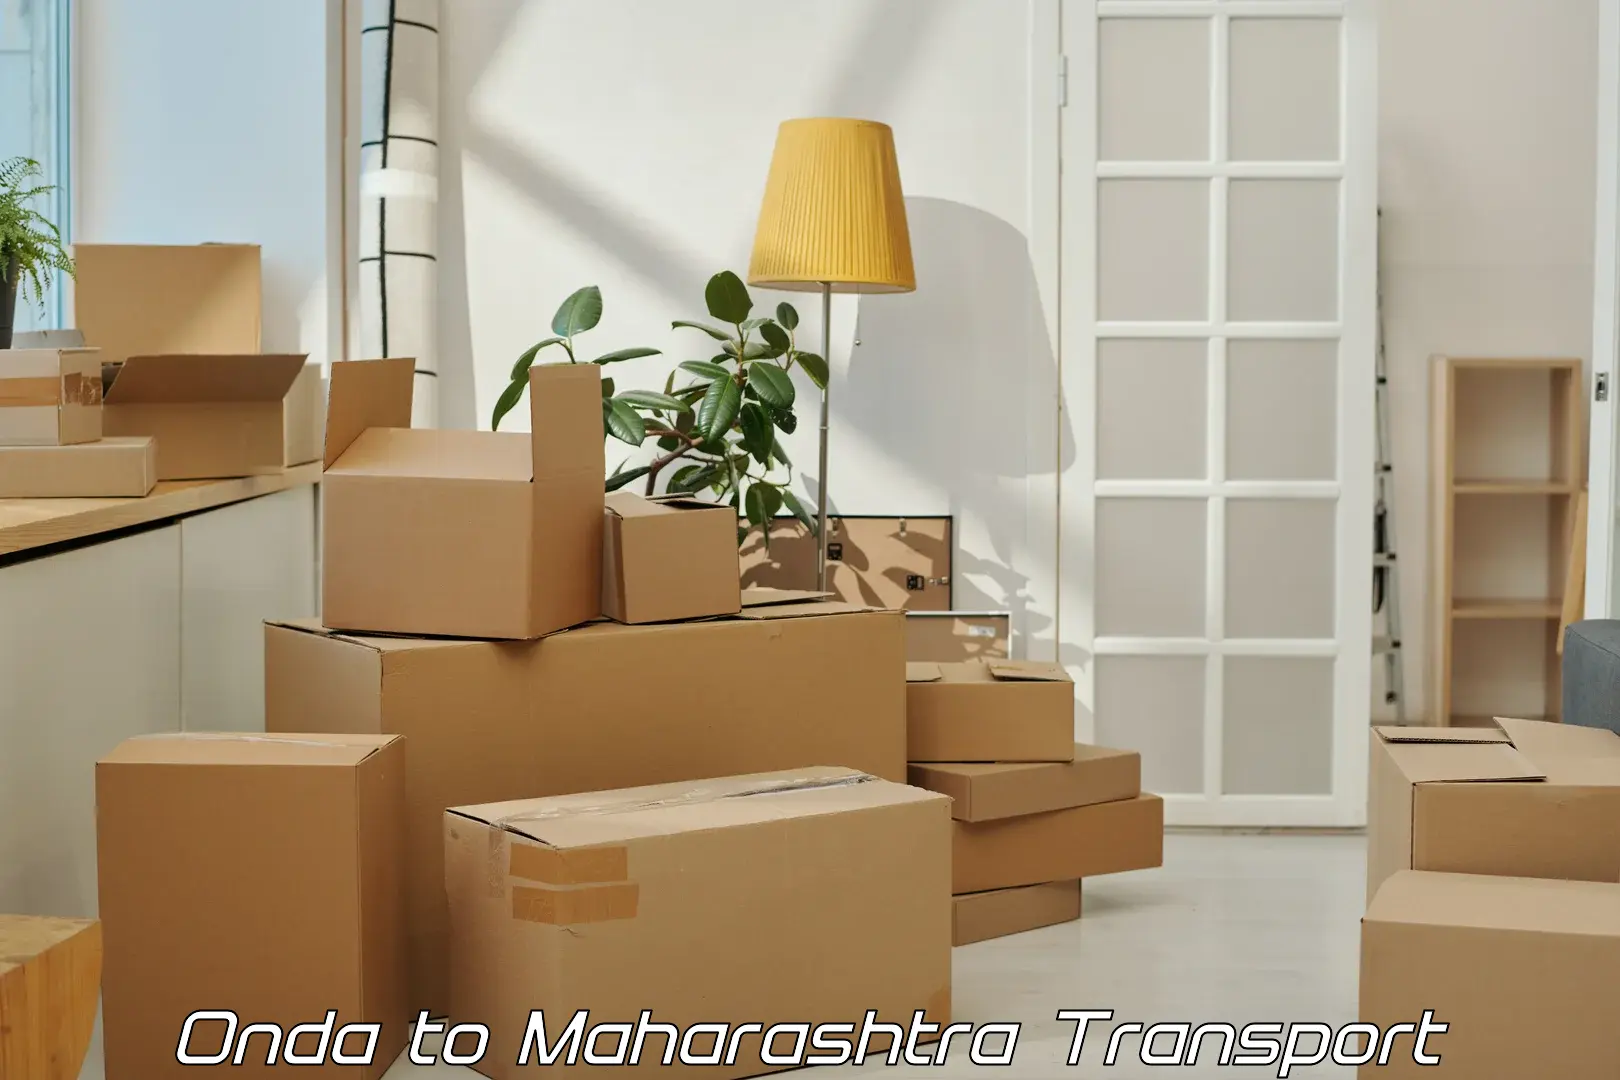 Delivery service Onda to Mumbai